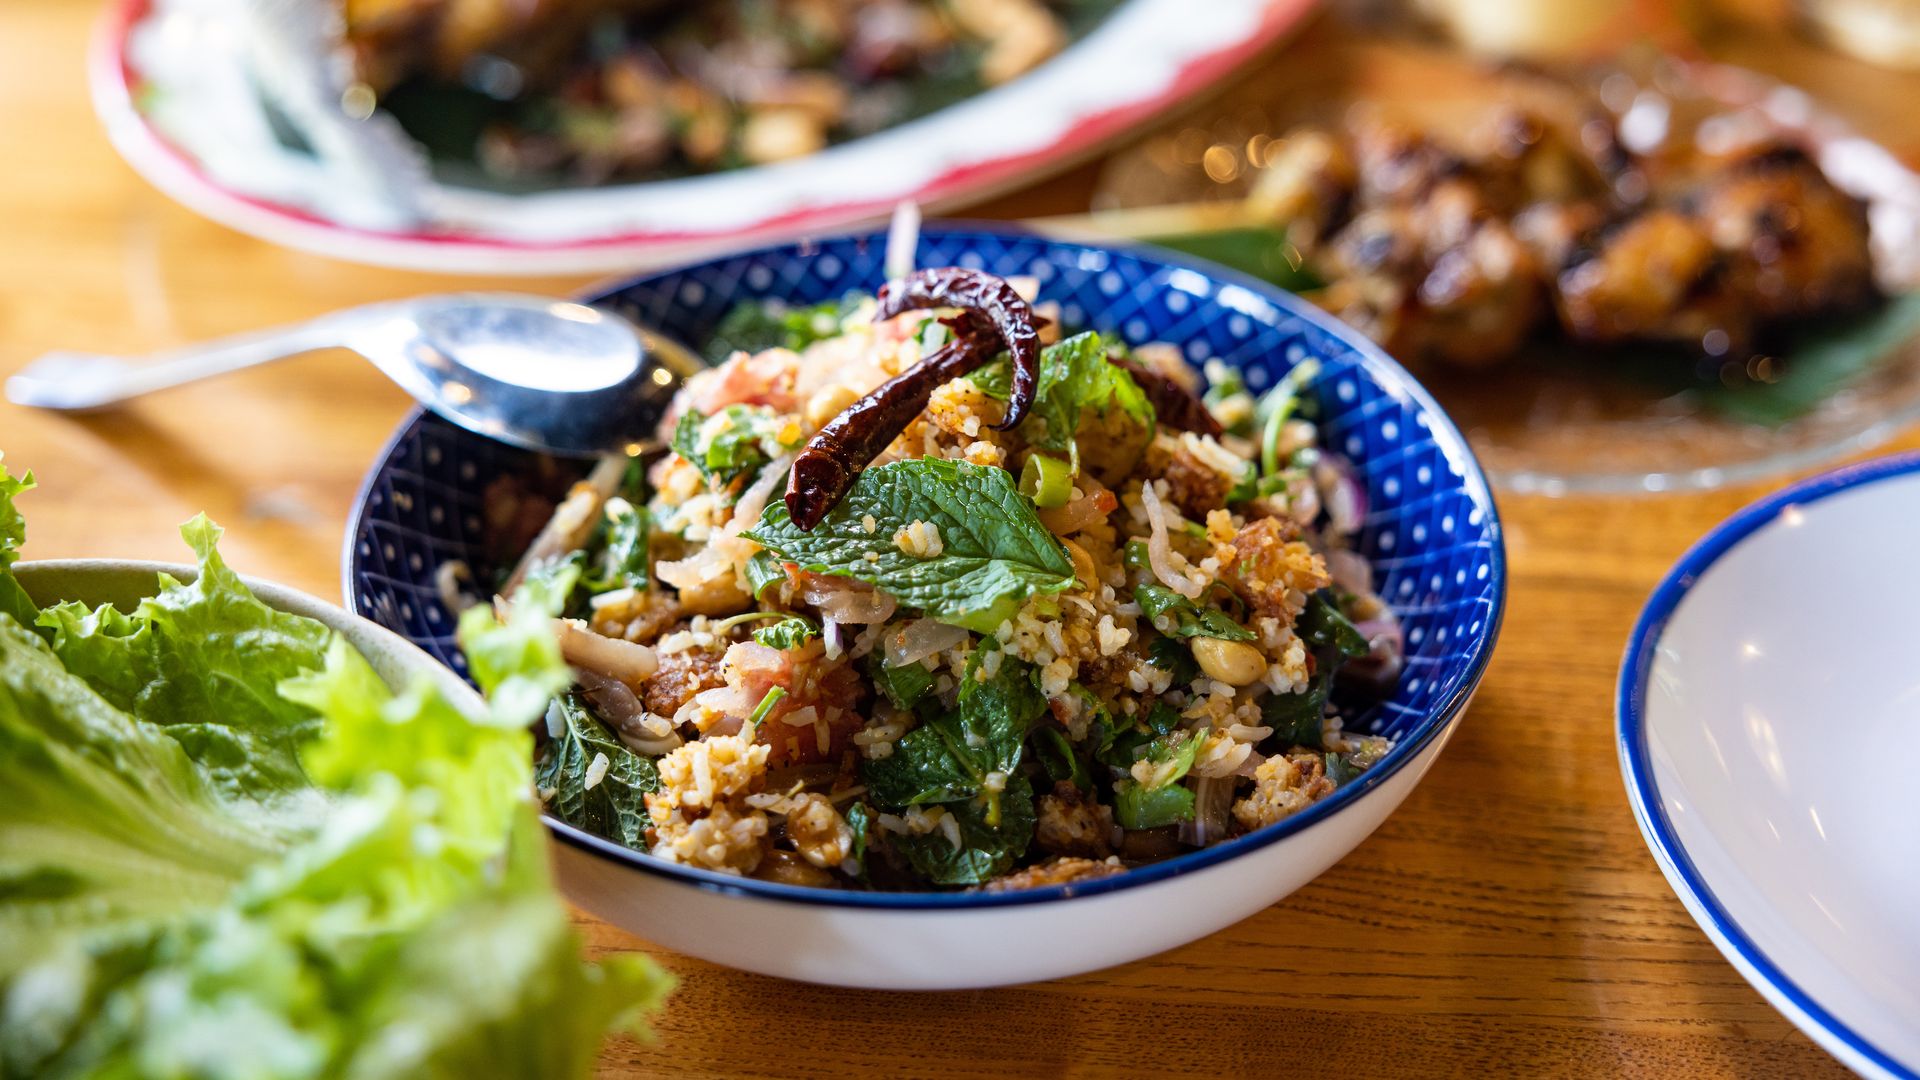 Crispy rice salad at Thip Khao. Photo: Noh Leftovers